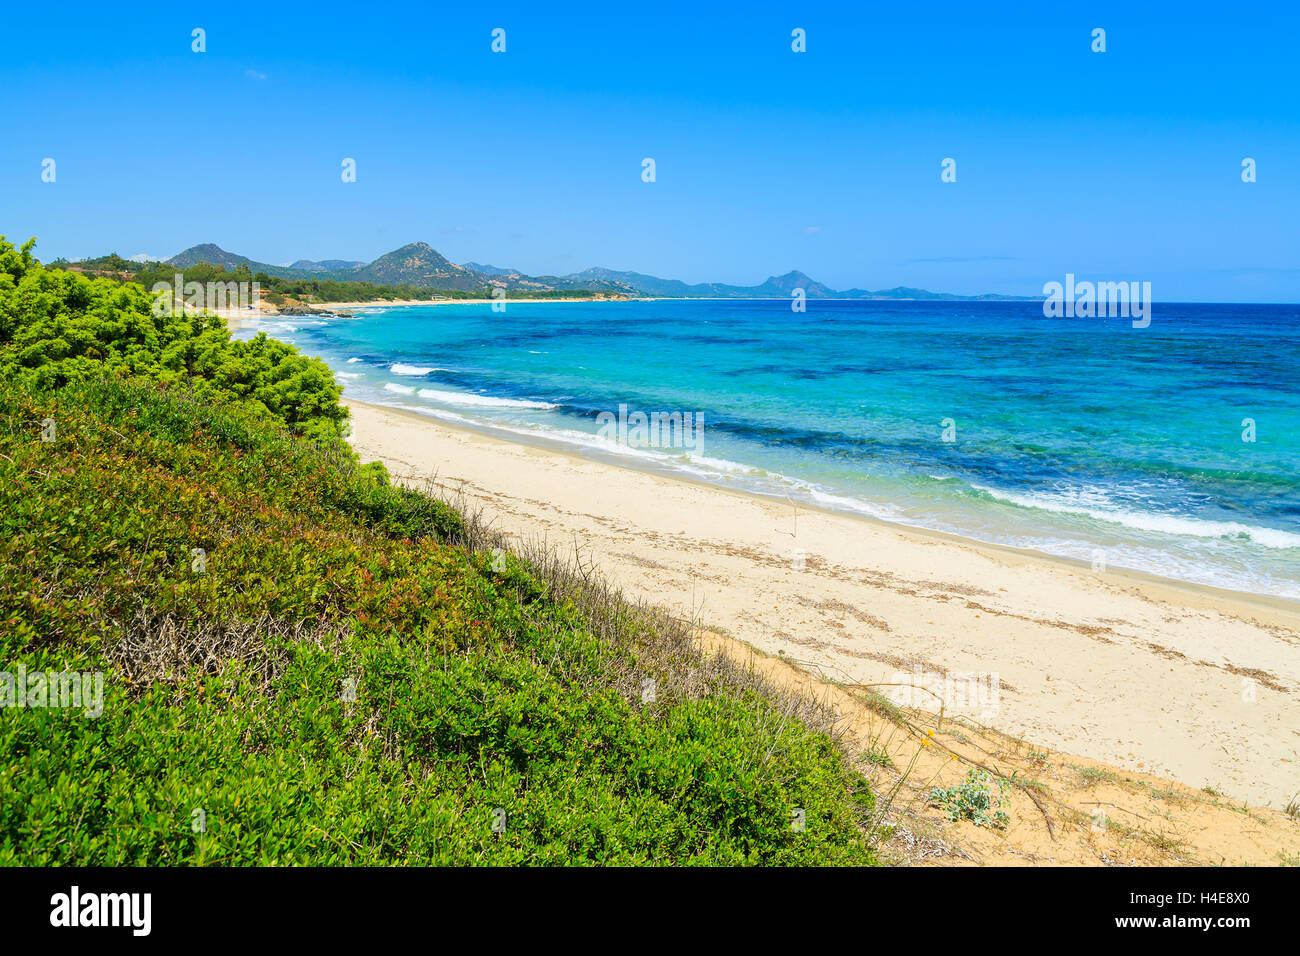 Peppino Strand und Kristall klaren türkisblauen Meer, Insel Sardinien, Italien Stockfoto